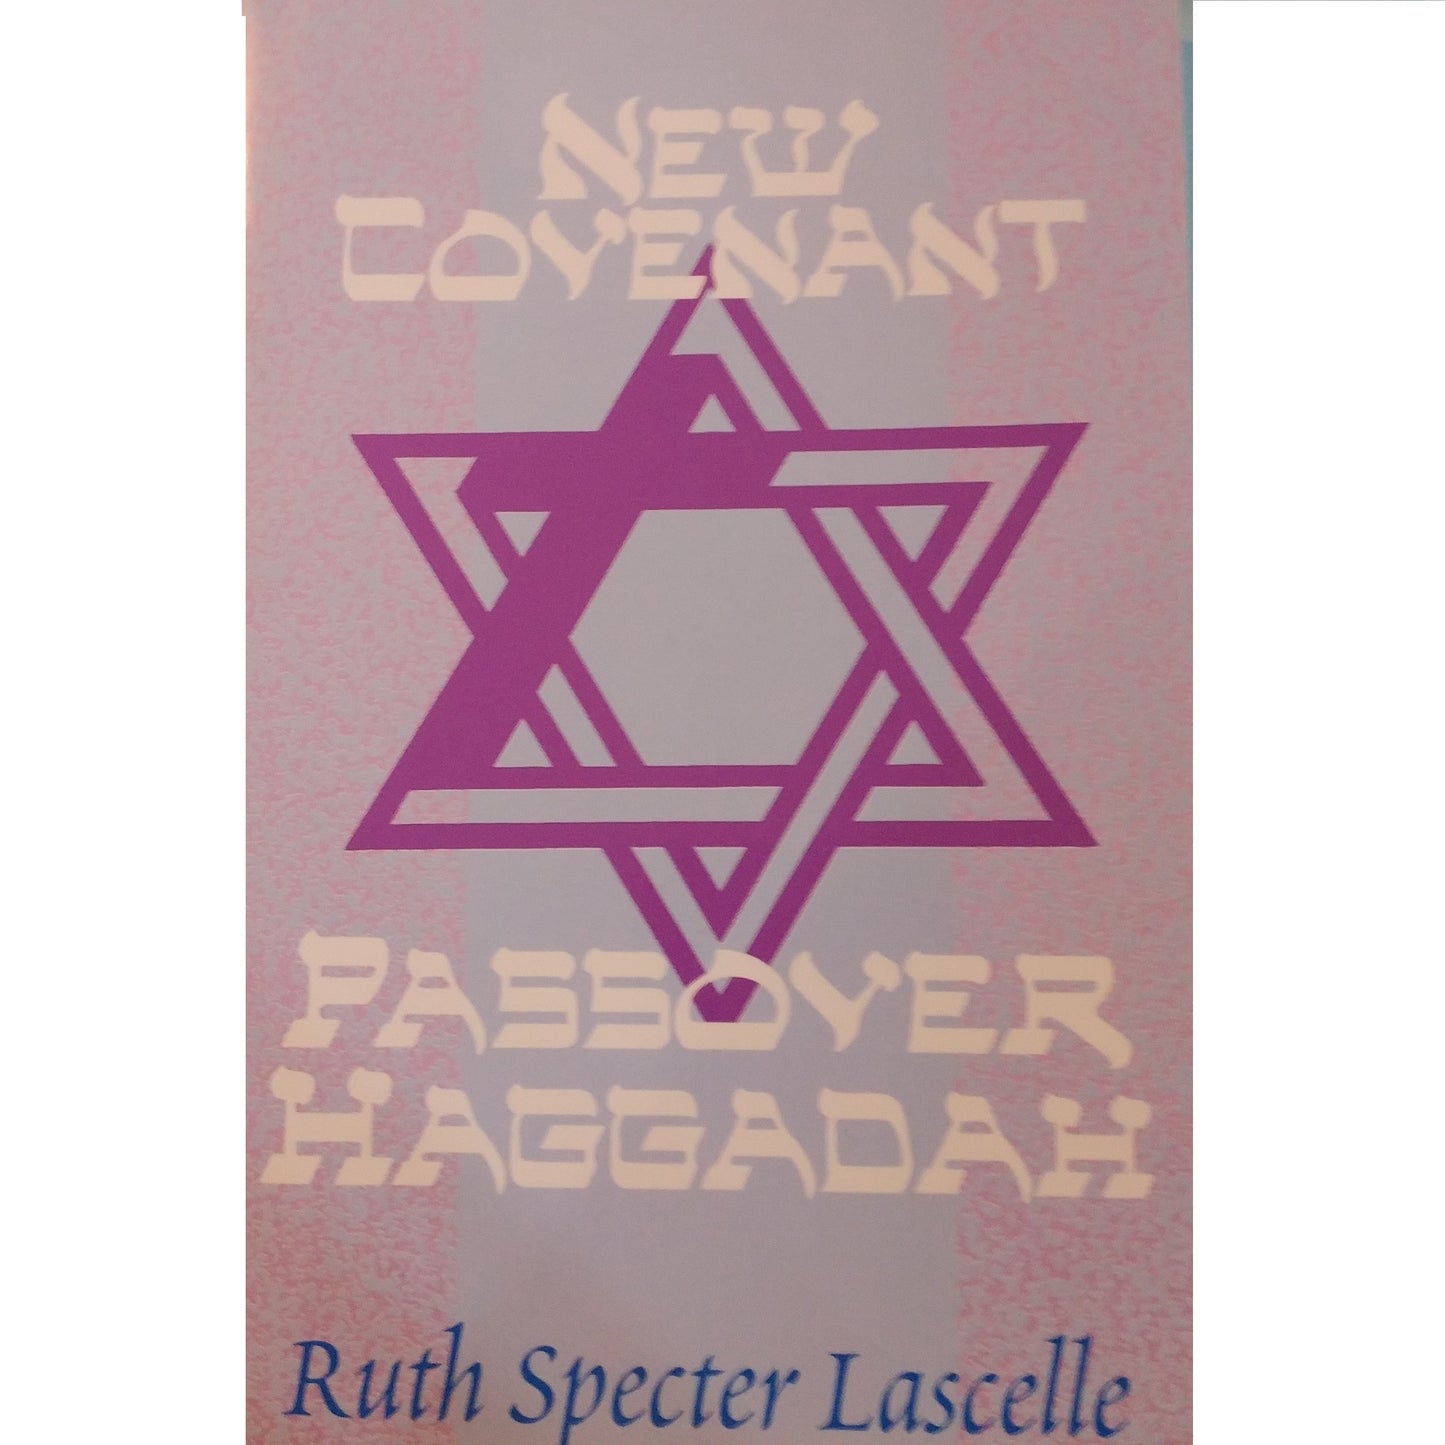 New Covenant Passover Hagaddah - CLOSEOUT